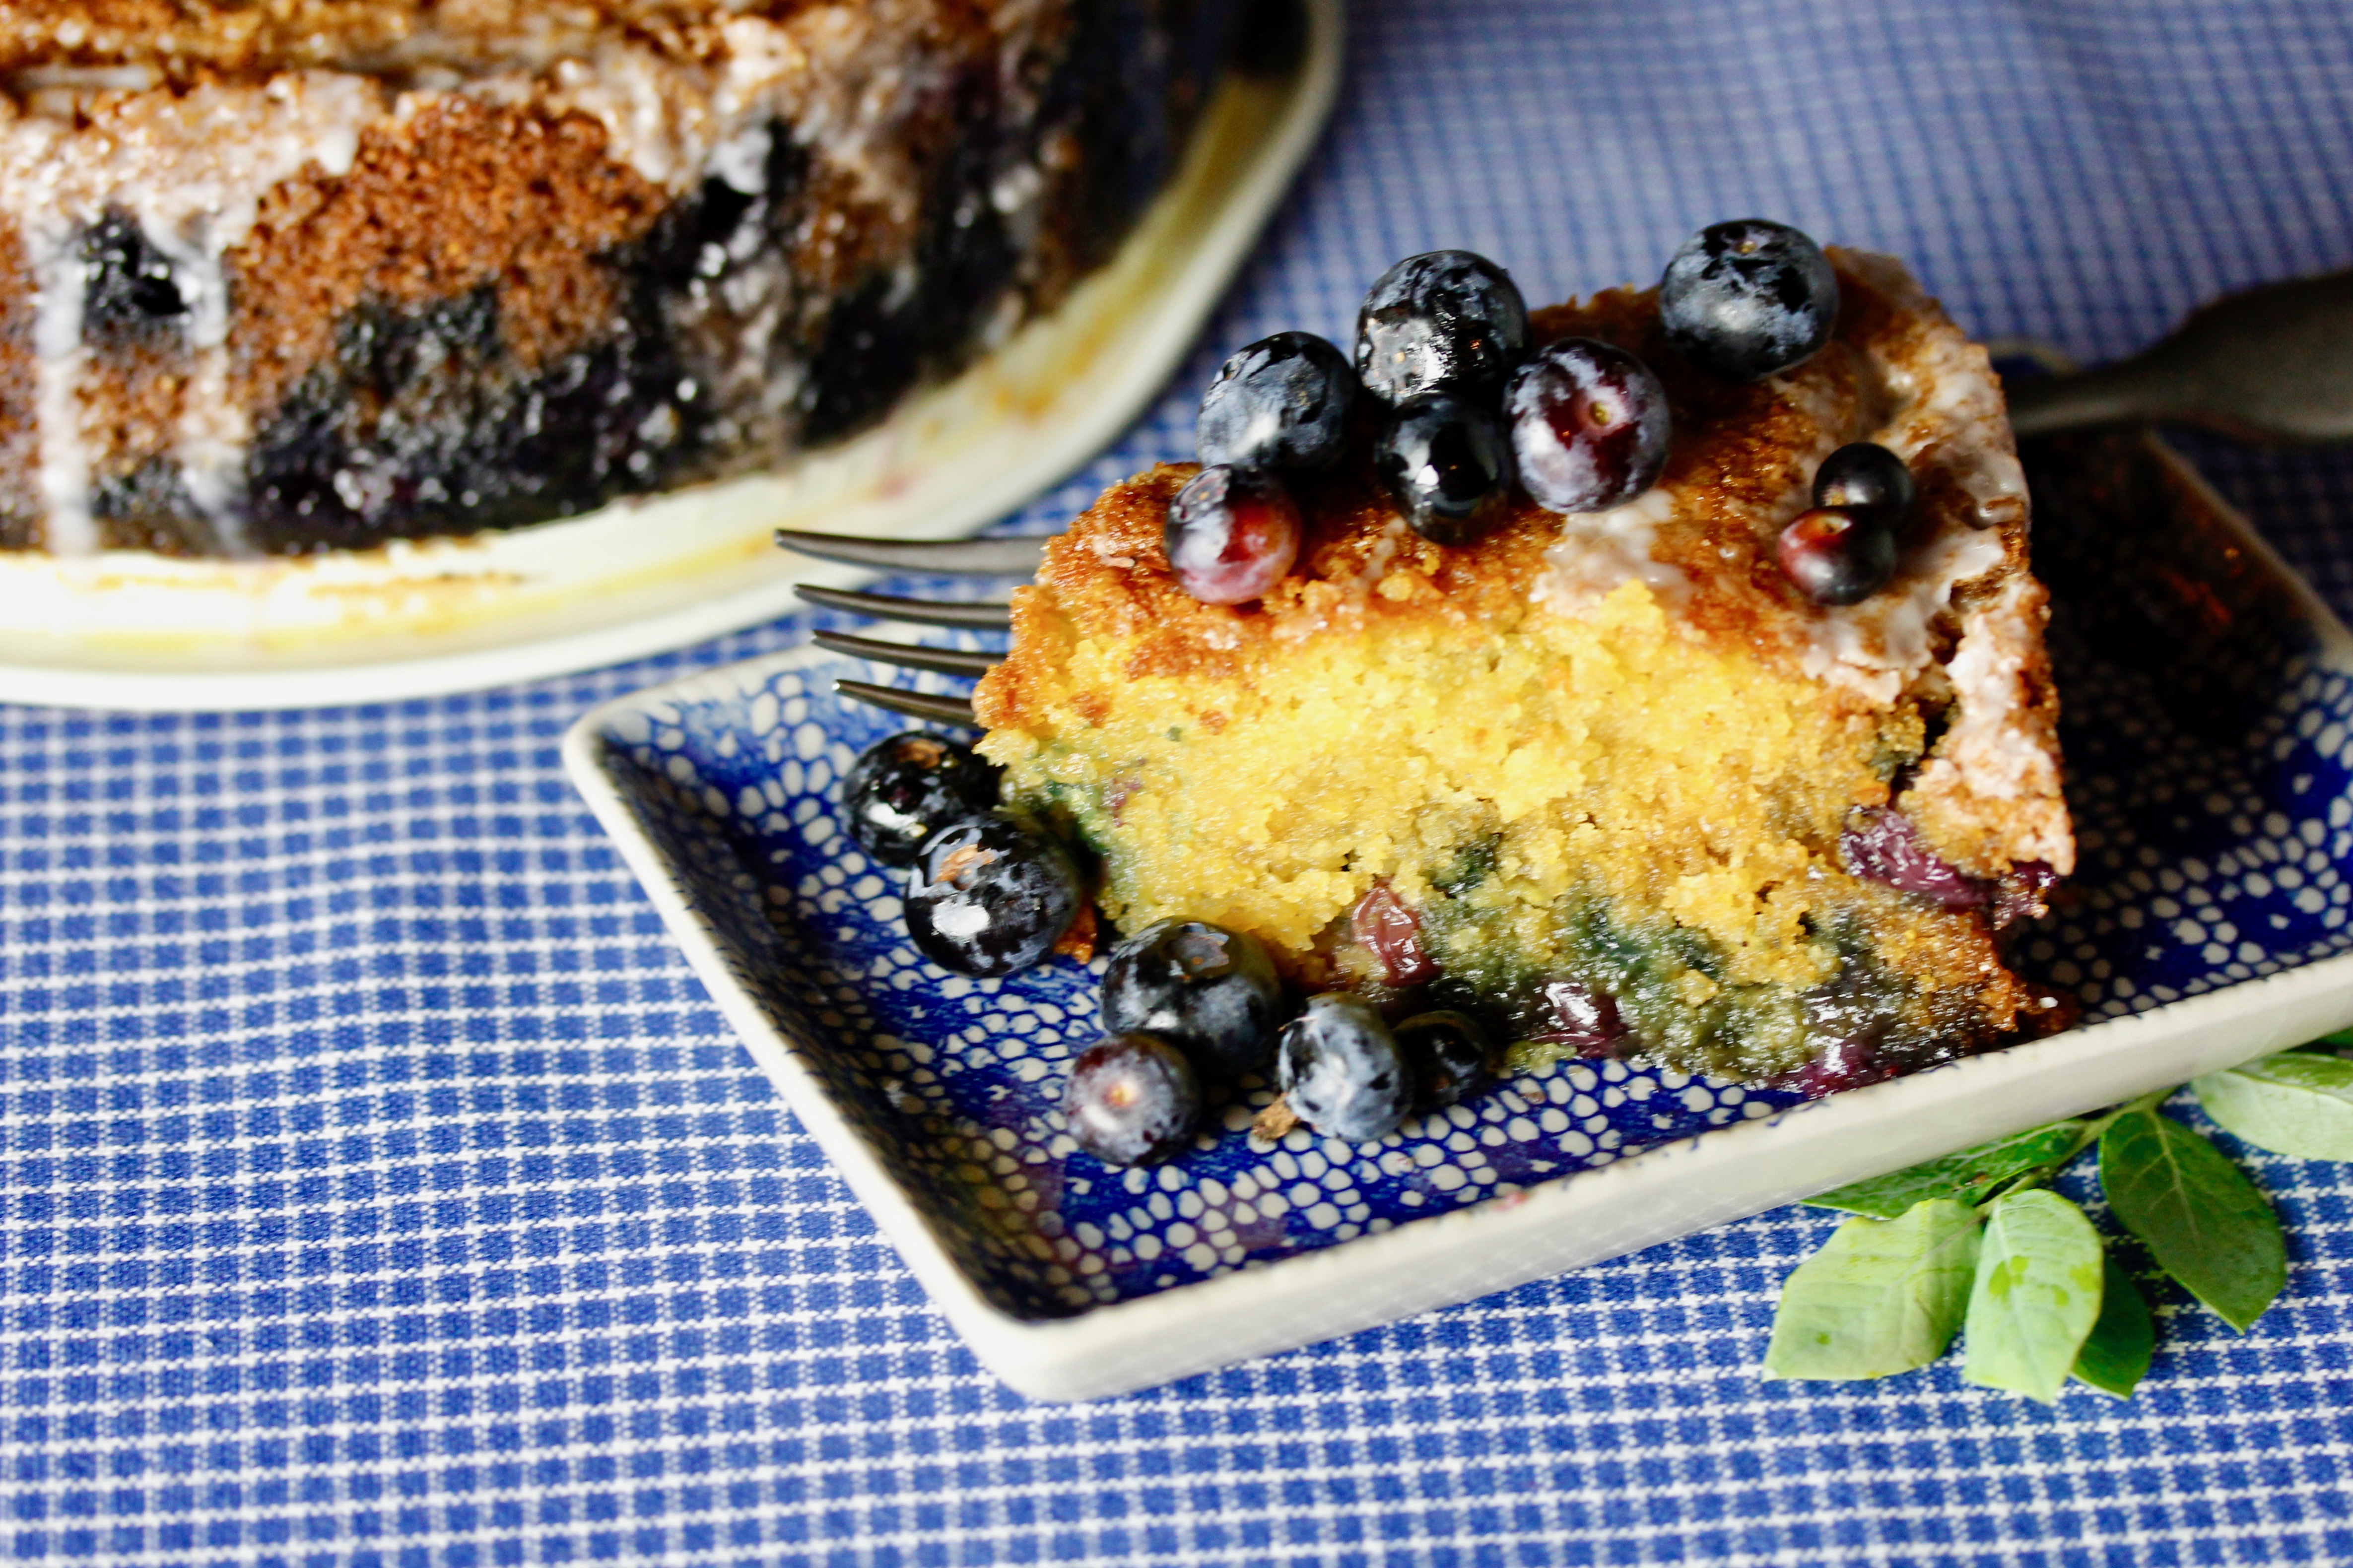 Blueberry Cornmeal Poundcake